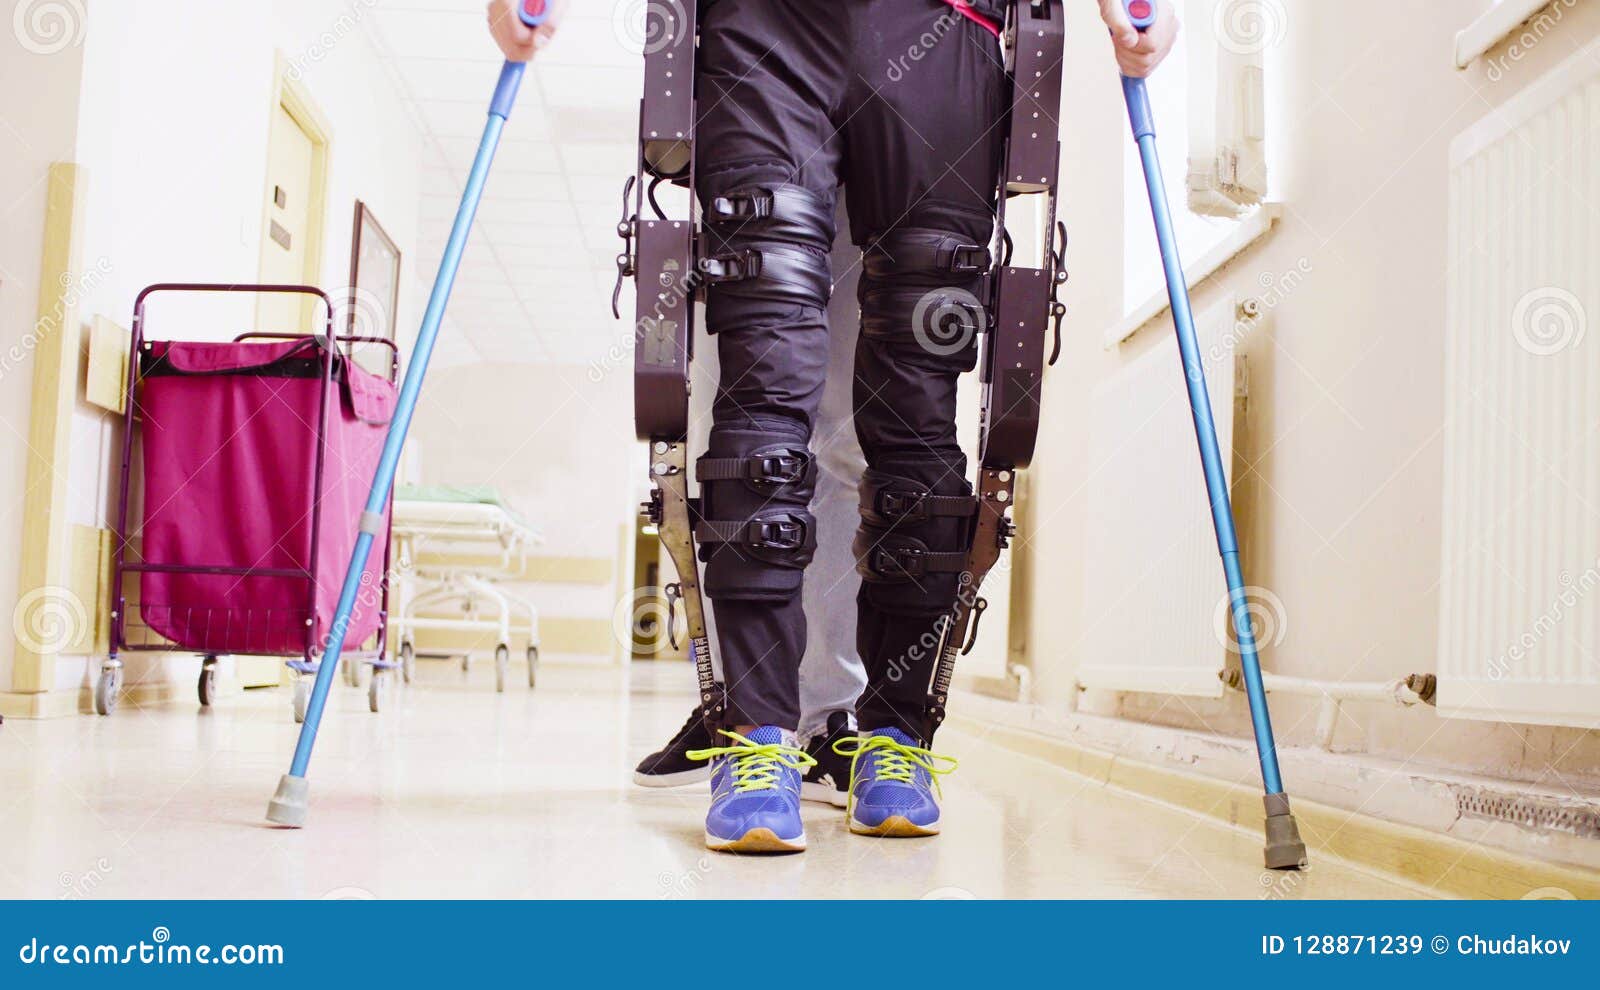 legs of invalid in robotic exoskeleton walking through the corridor